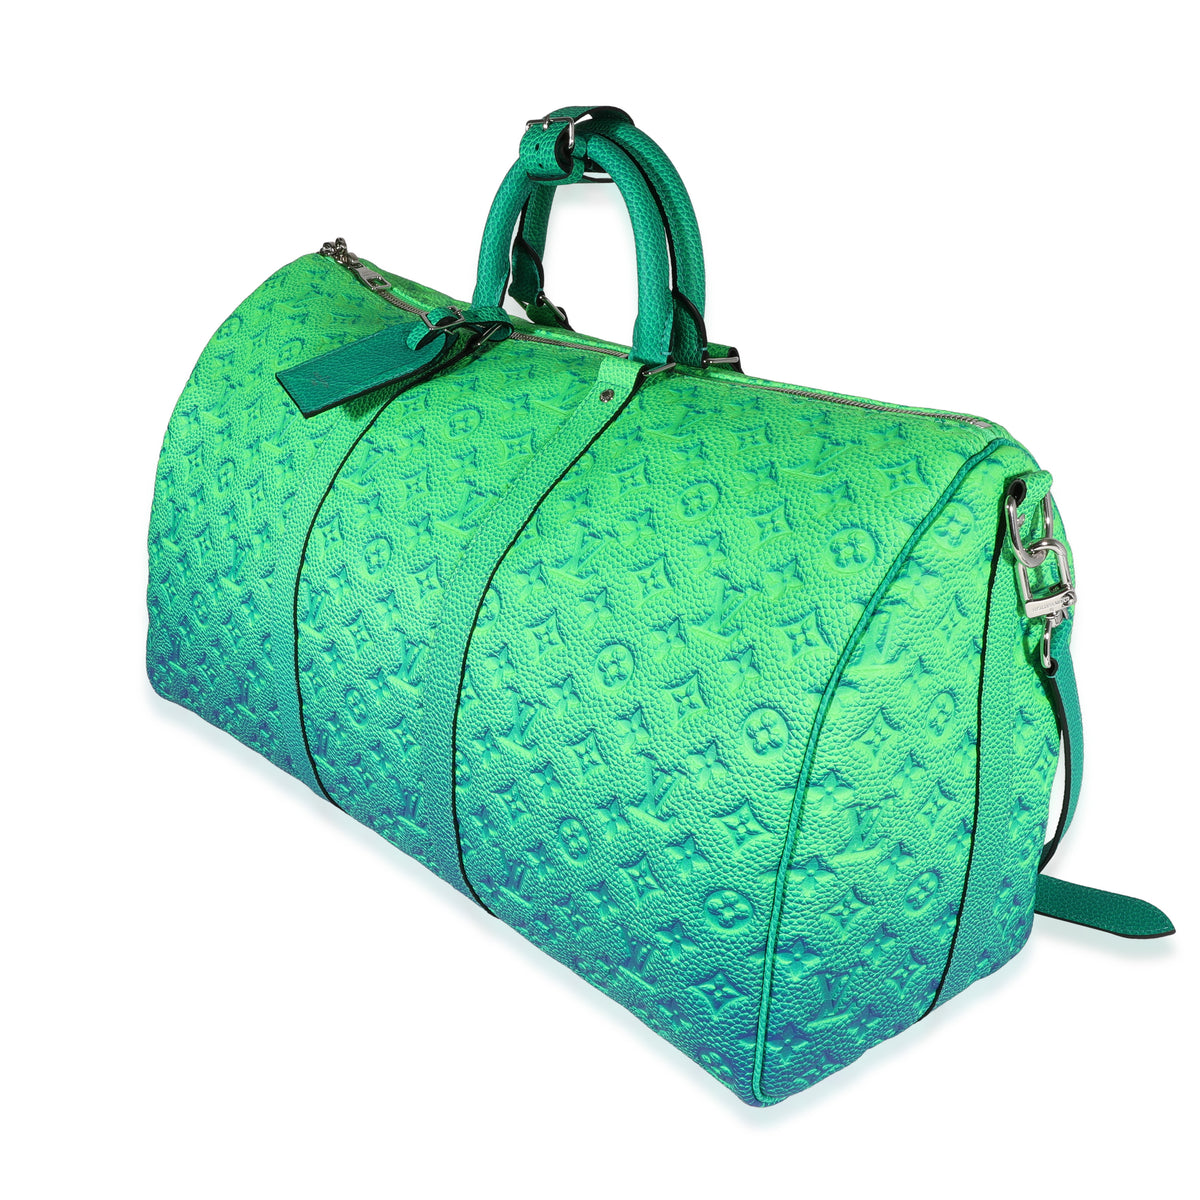 Brand New Louis Vuitton Keepall 50B Taurillon Illusion Blue/Green